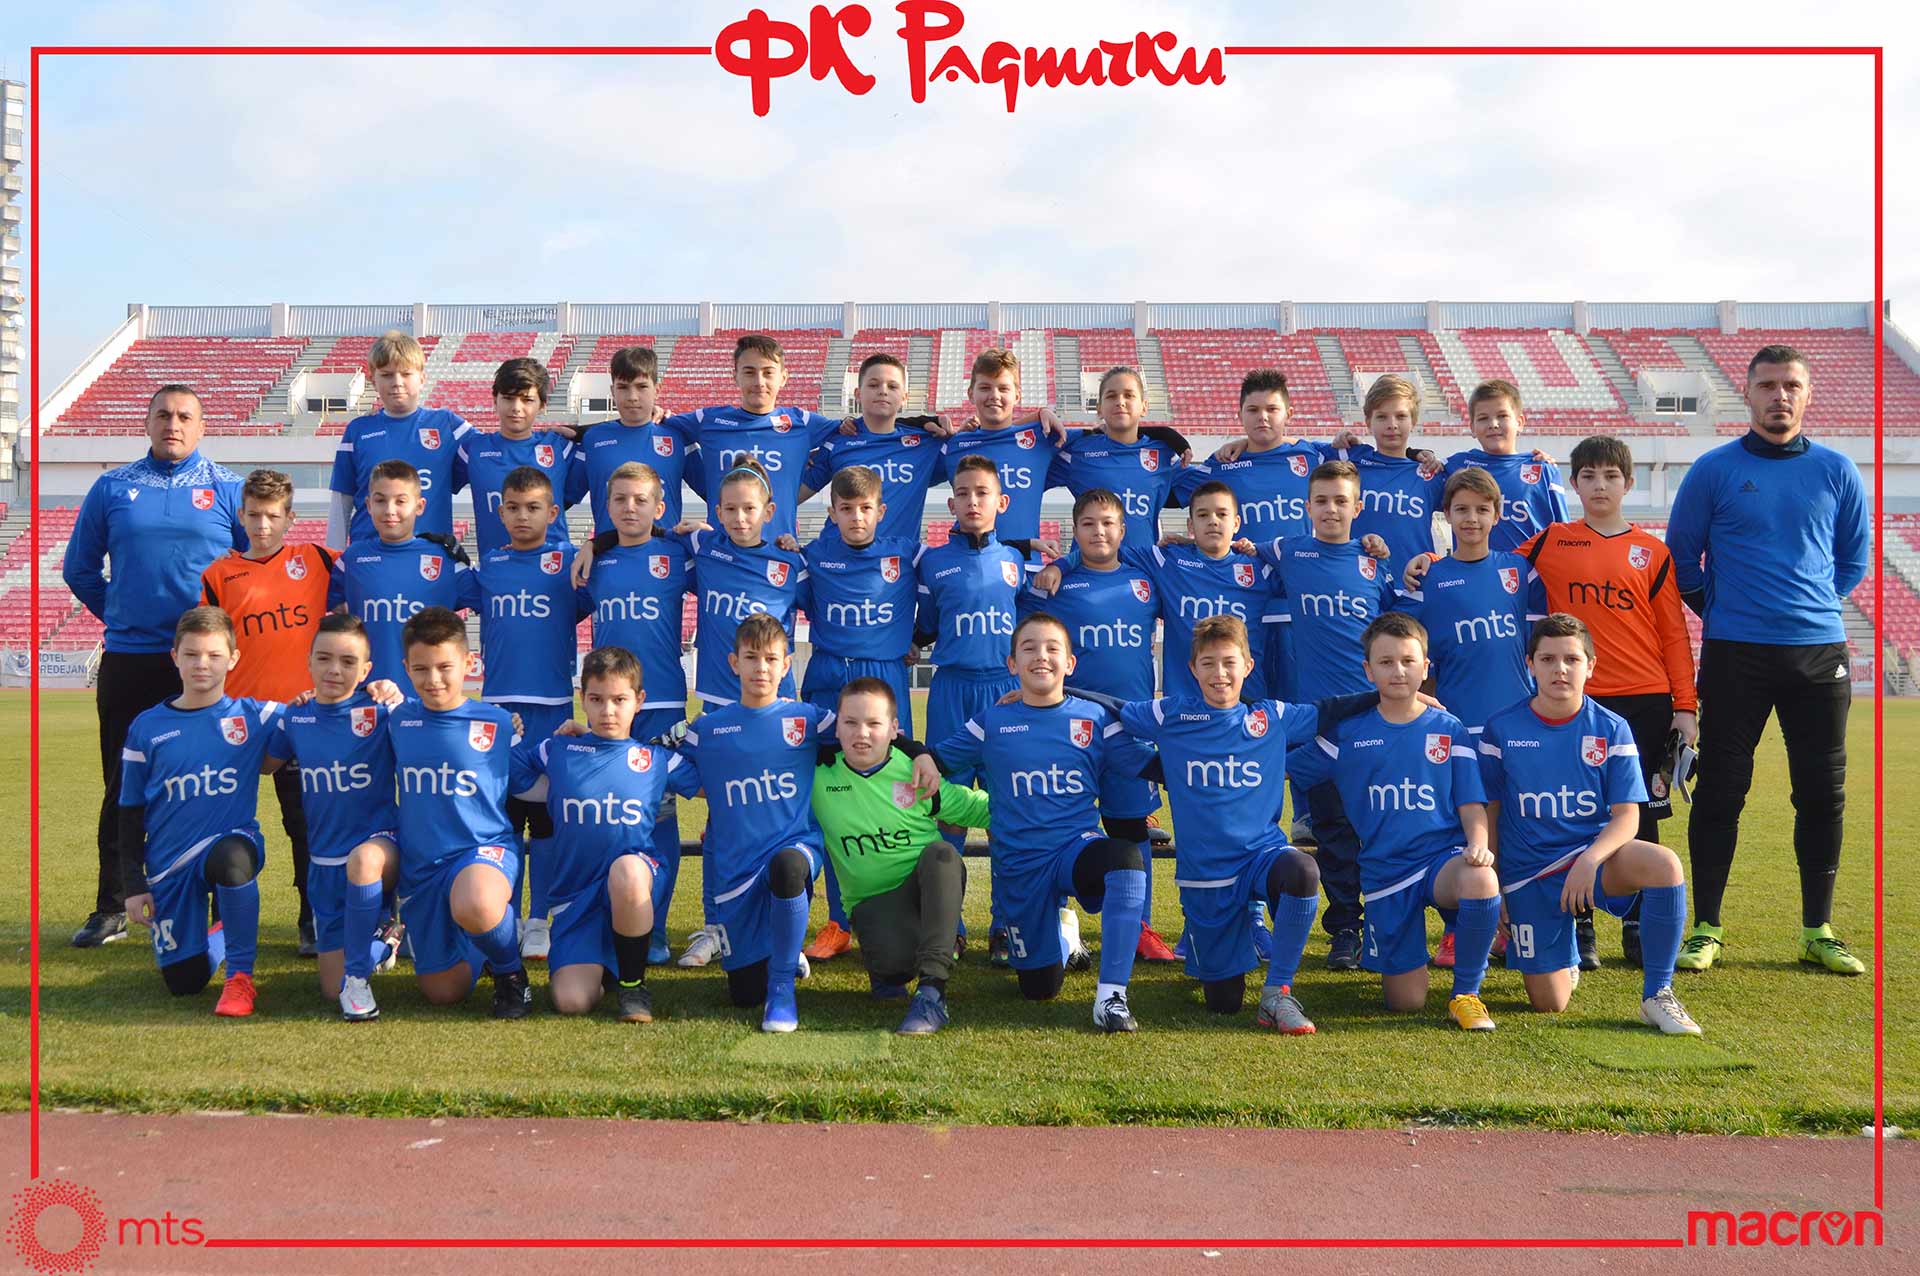 Škola fudbala FK Radnički Niš (@skolafudbalafkradnicki